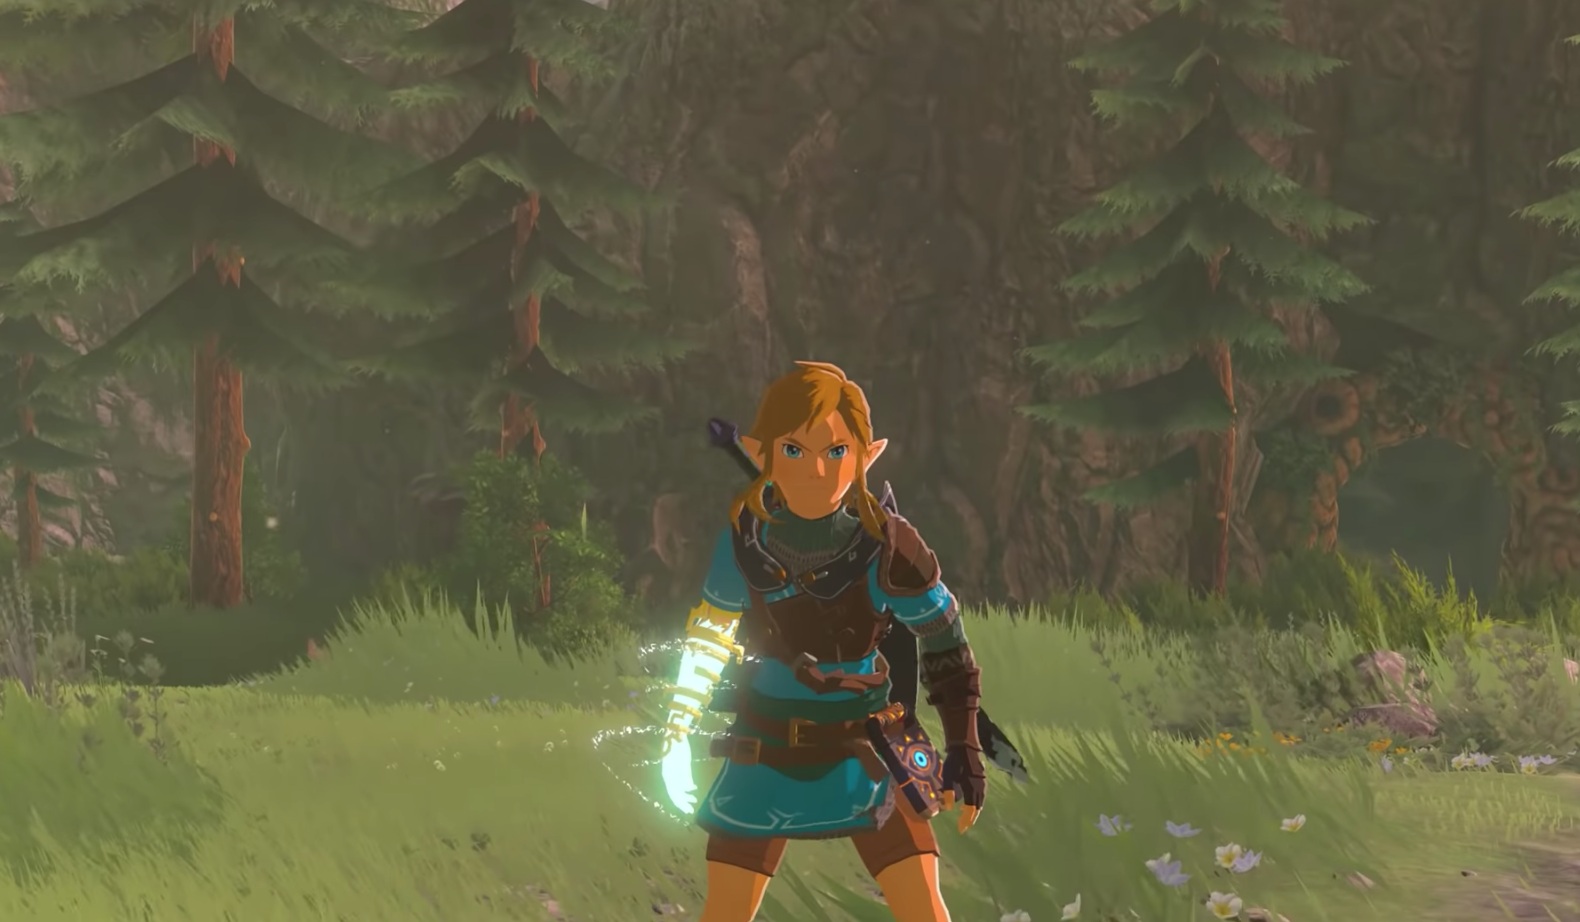 Link facing the viewer, in Legend of Zelda: Breath of the Wild